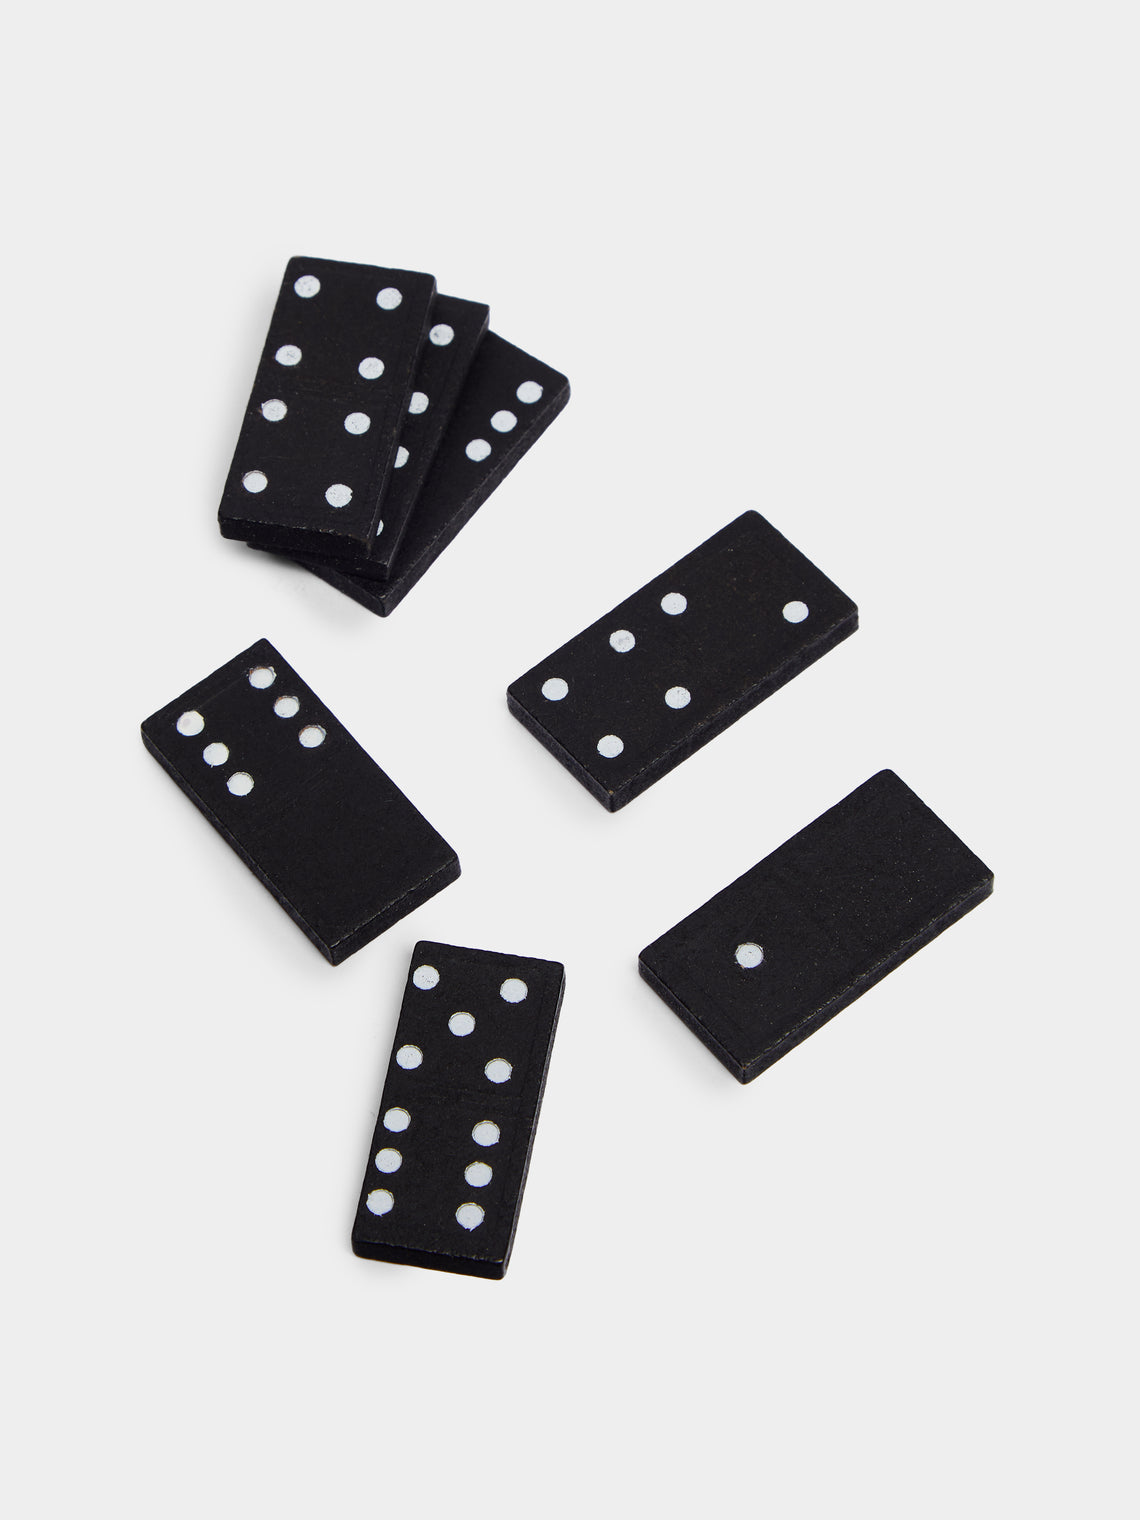 F. Hammann - Leather Dominoes Set -  - ABASK